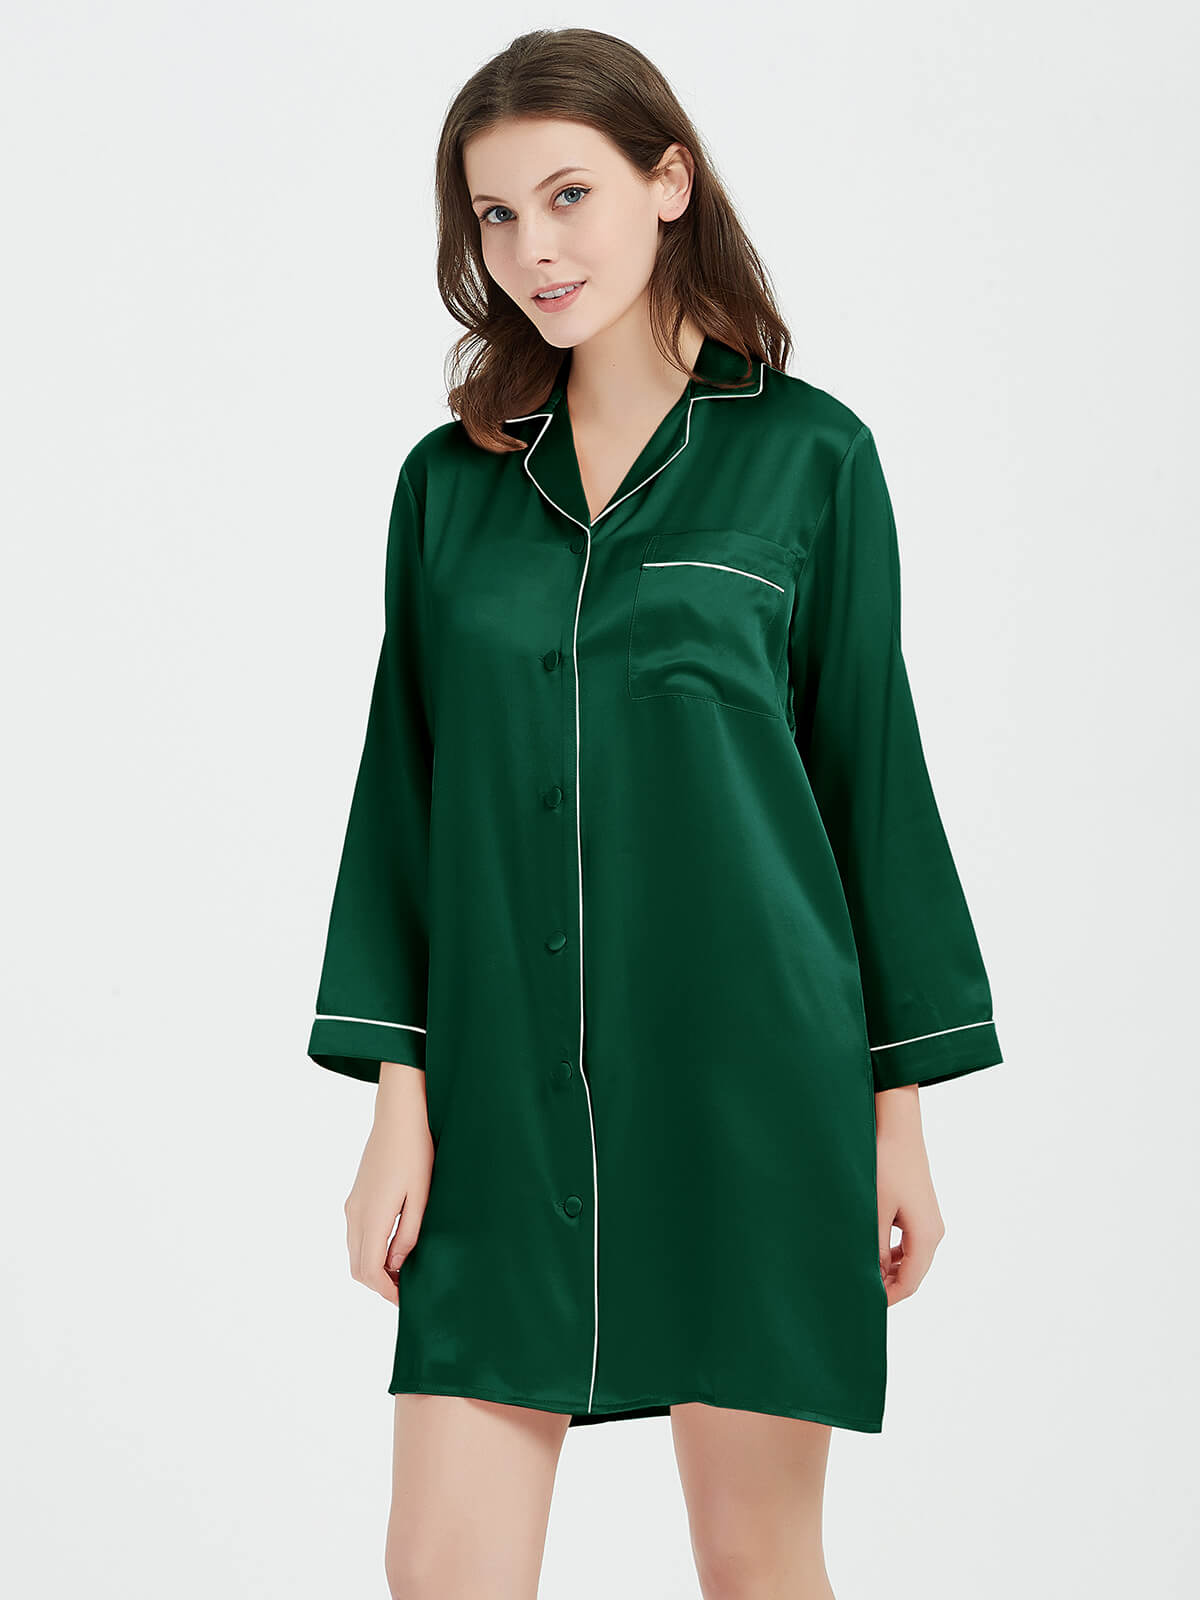 19 Momme Classic Elegant Long Sleeve Silk Pajama Shirt for Women